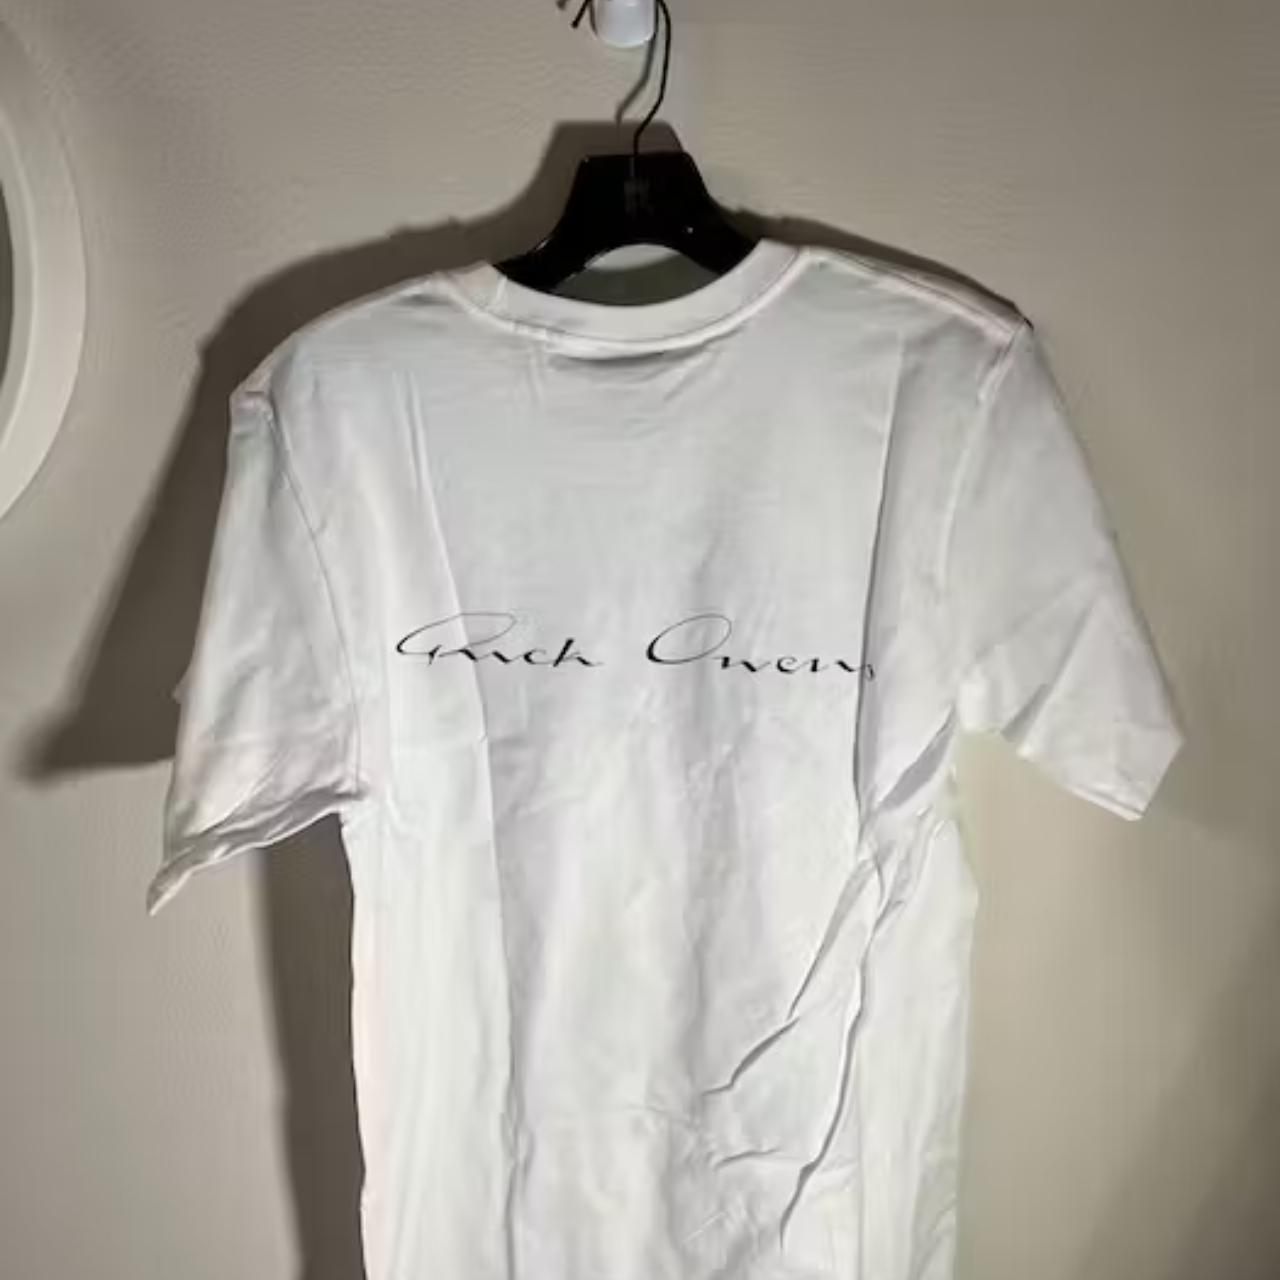 Rick Owens x Stussy T-shirt Never worn, with... - Depop